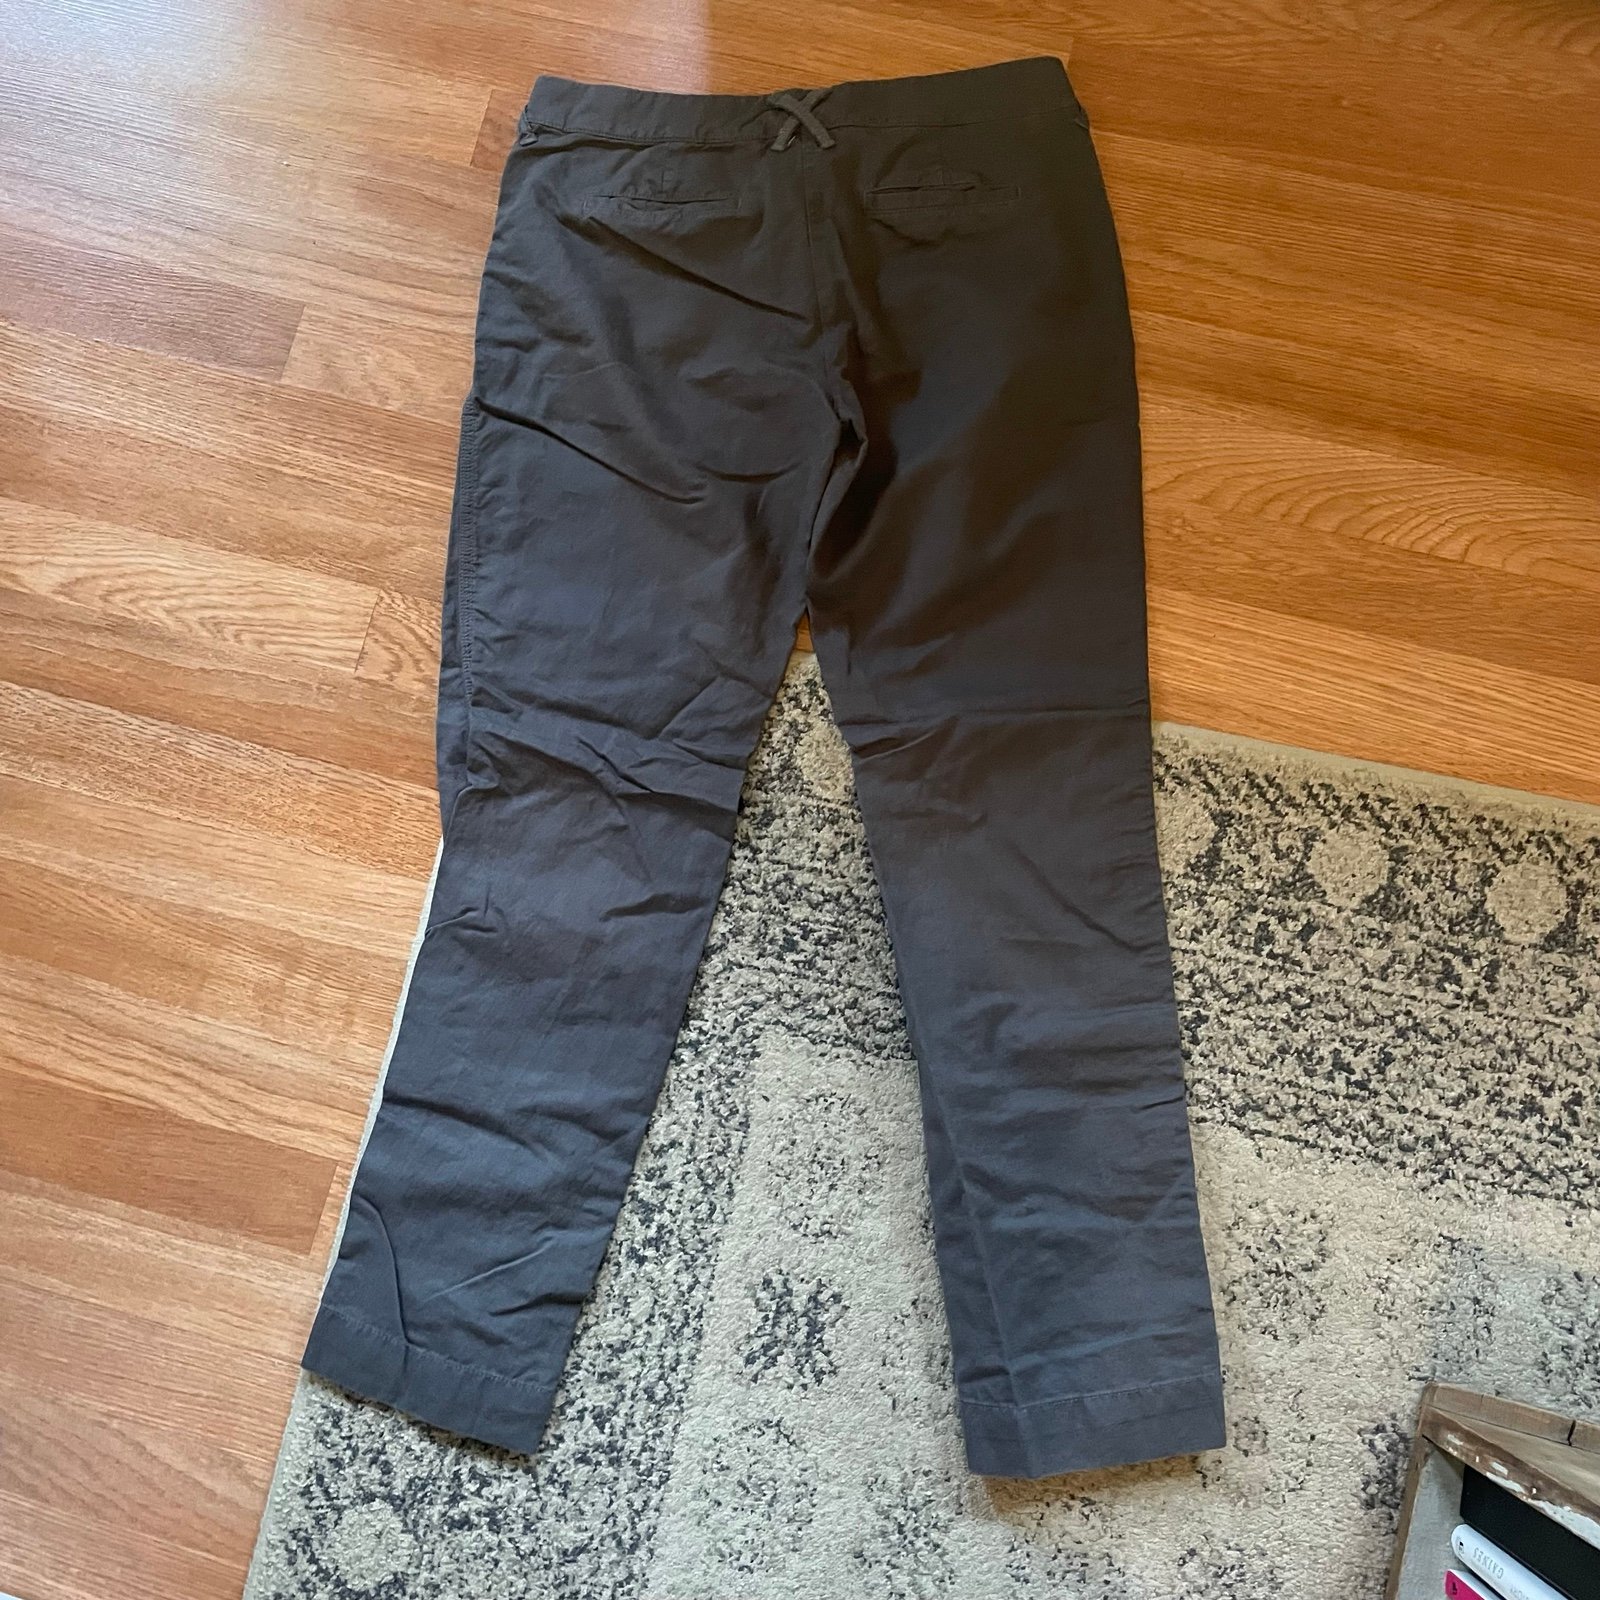 Buy J.crew Size 4 Gray Pants NNbtkVgf0 US Outlet